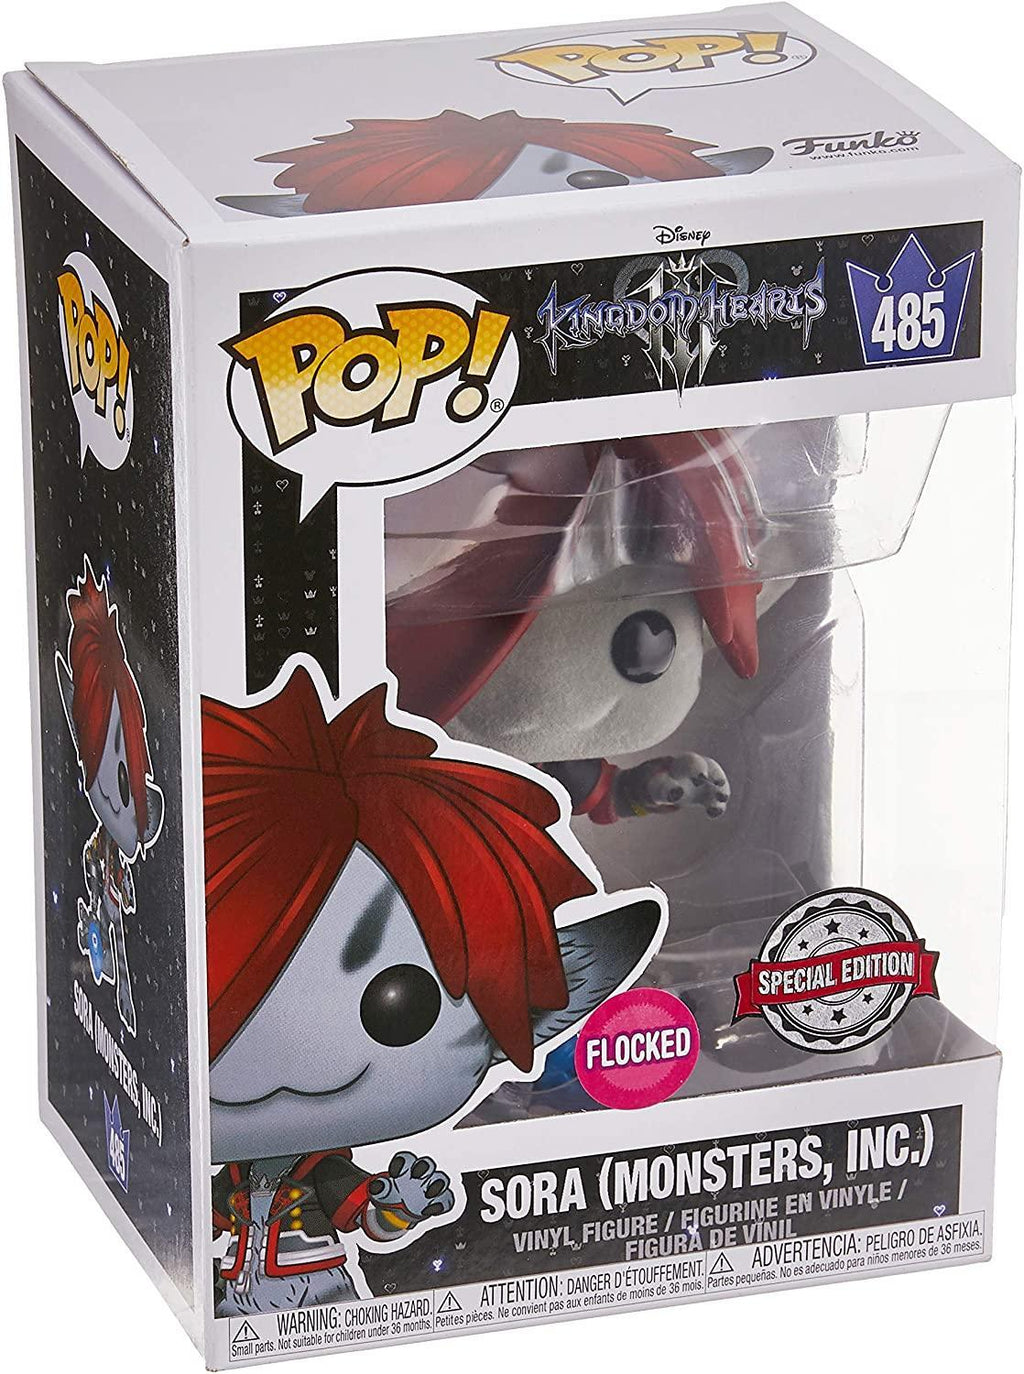 Pop Kingdom Hearts Sora Monsters, Inc. Flocked Vinyl Figure Box Lunch Exclusive #485